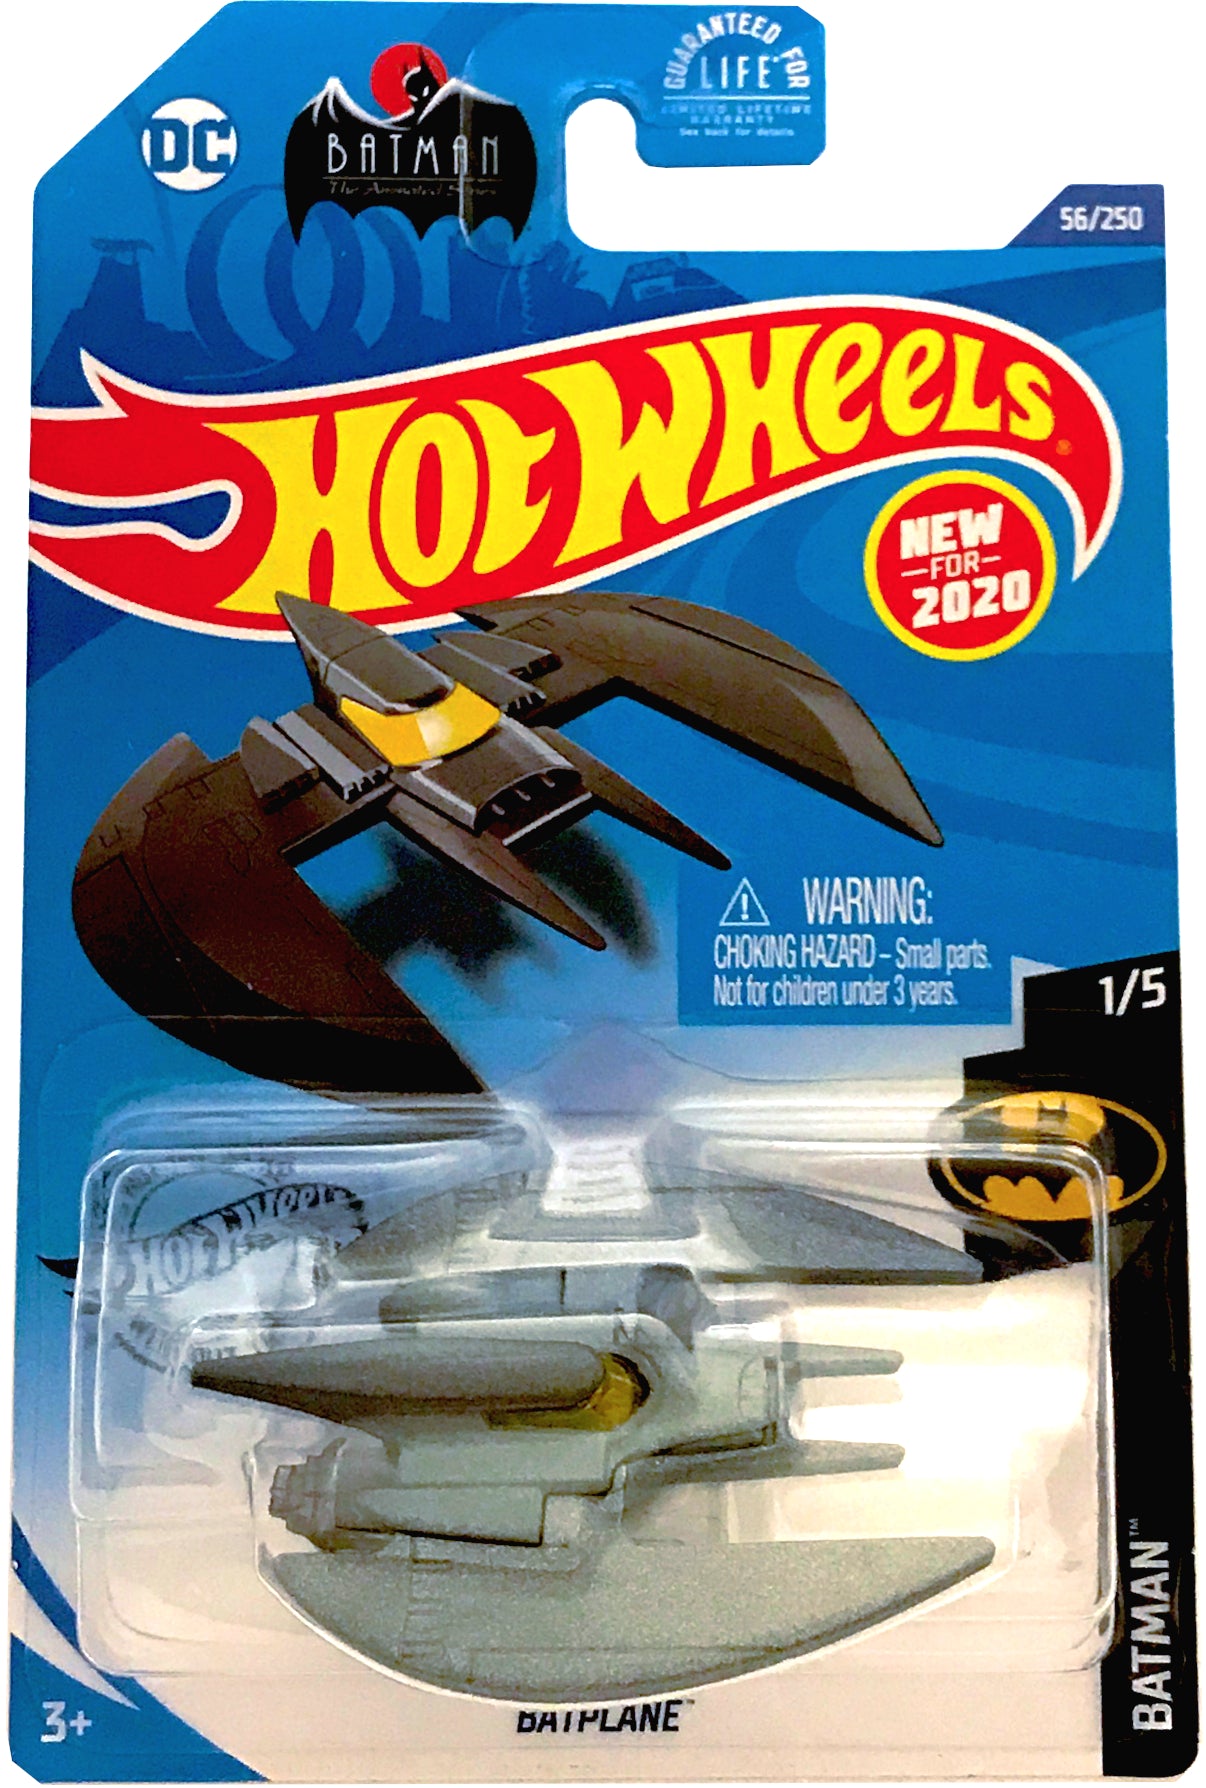 2020 Hot Wheels Mainline #056 - Batman Animated Series Batplane (Silver) GHD94